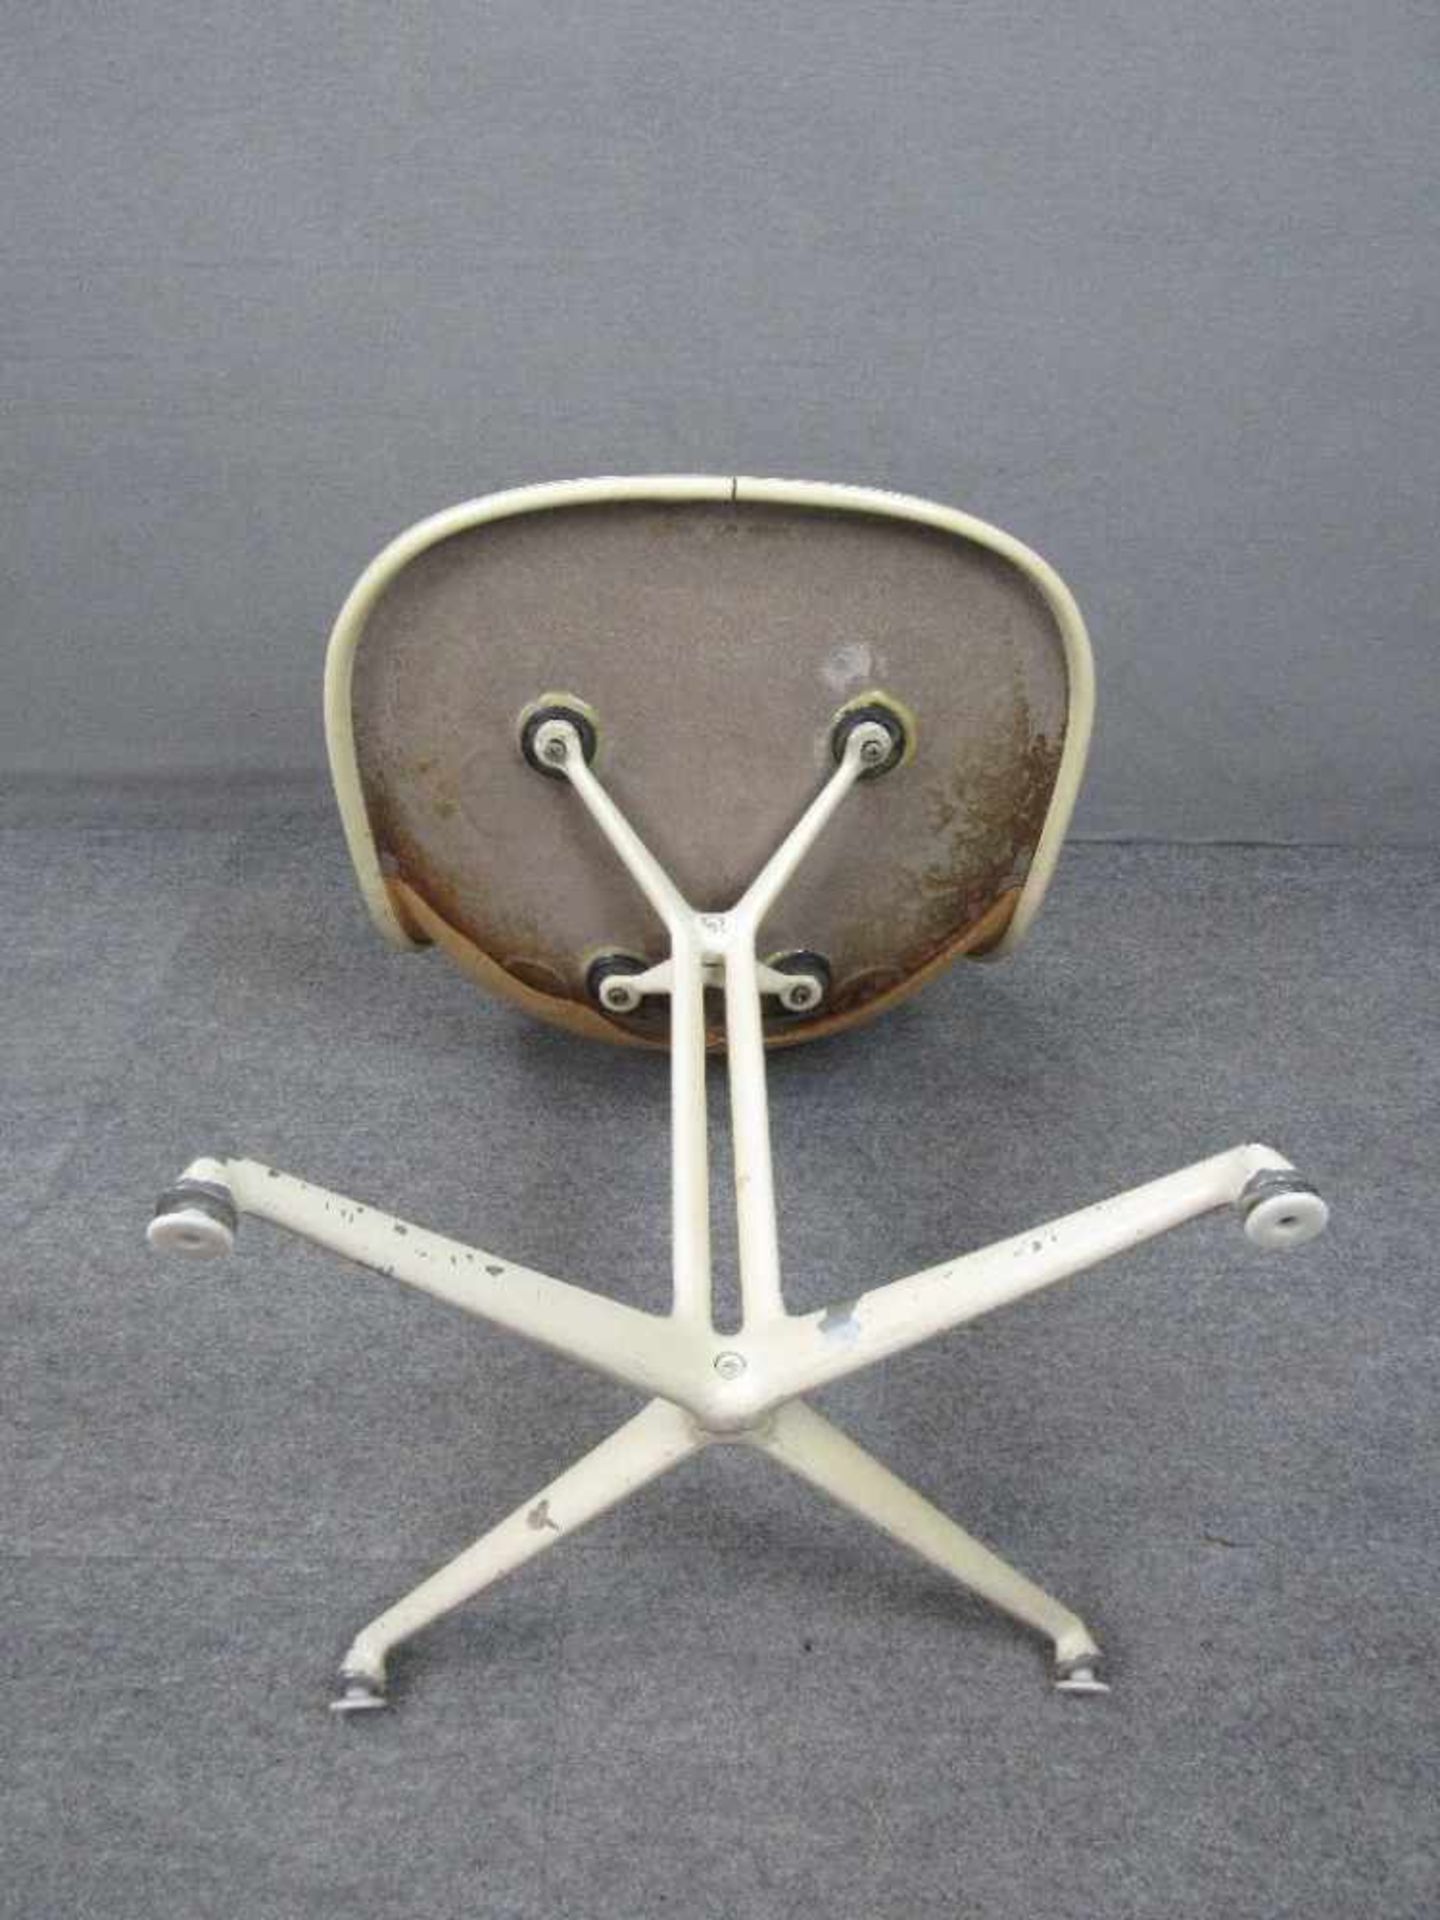 Vintage Stuhl Eams Fiberglas mit Lederbezug auf La Fonda Base Side Chair Charles & Ray Eames - Image 5 of 5